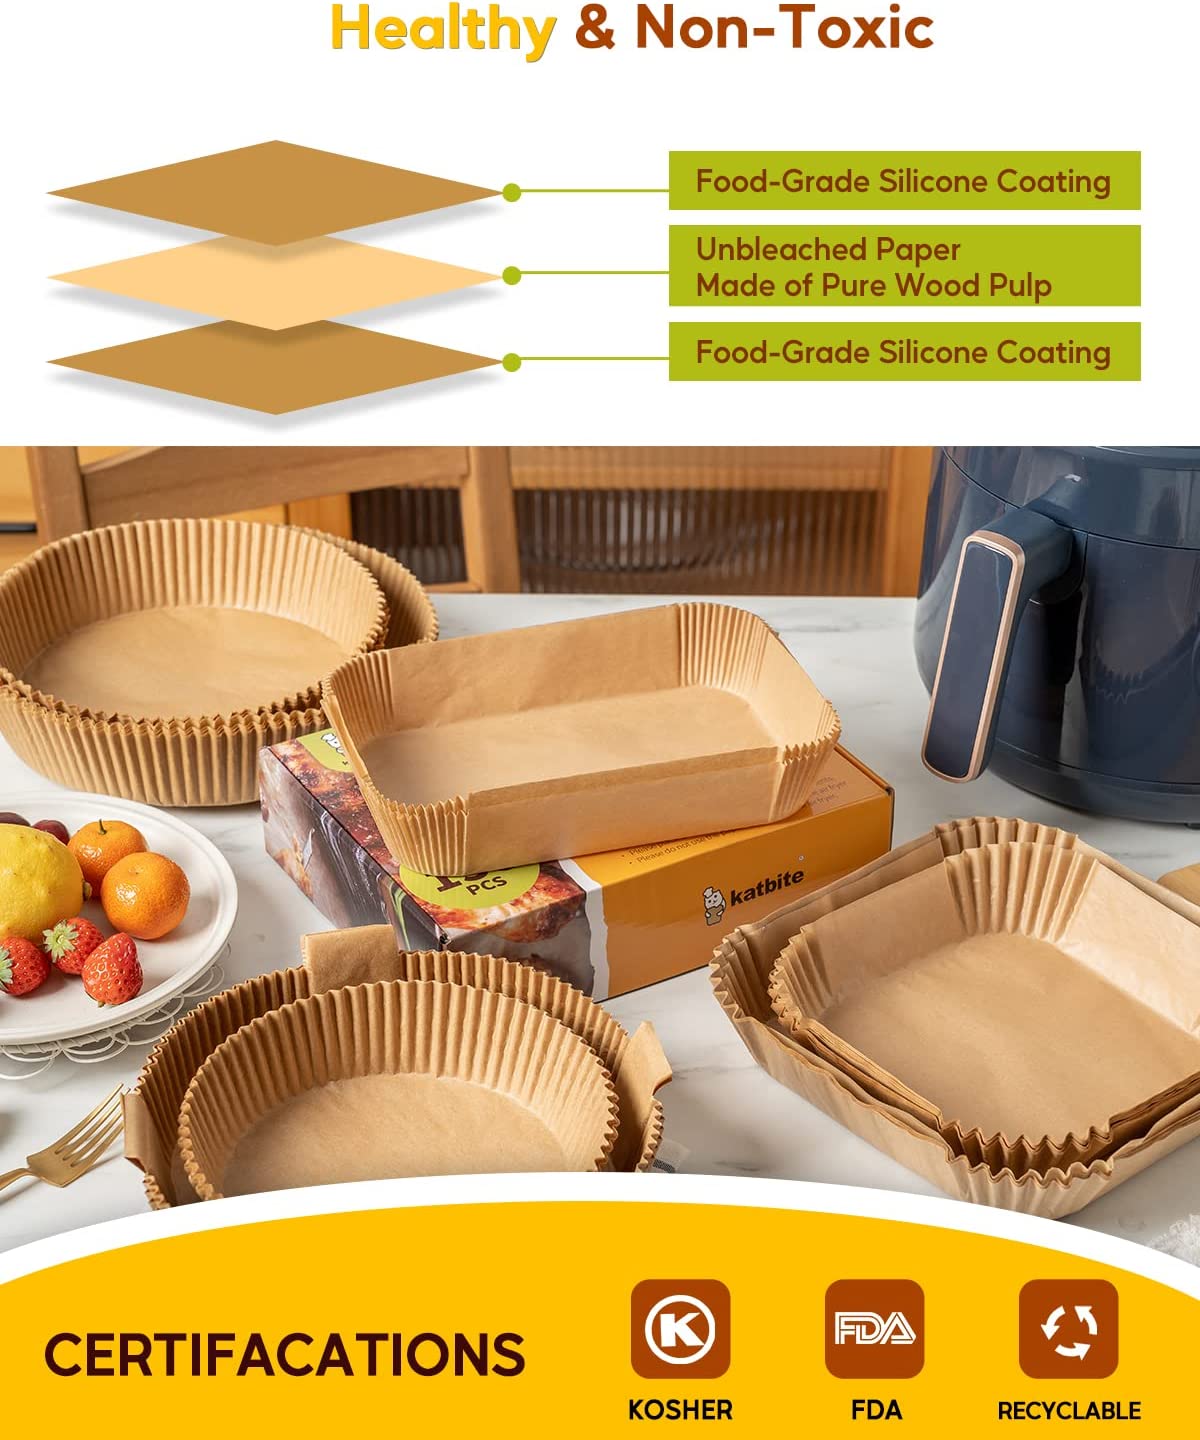 Ninja Foodi Dual 2-basket Air Fryer Parchment Paper Liners